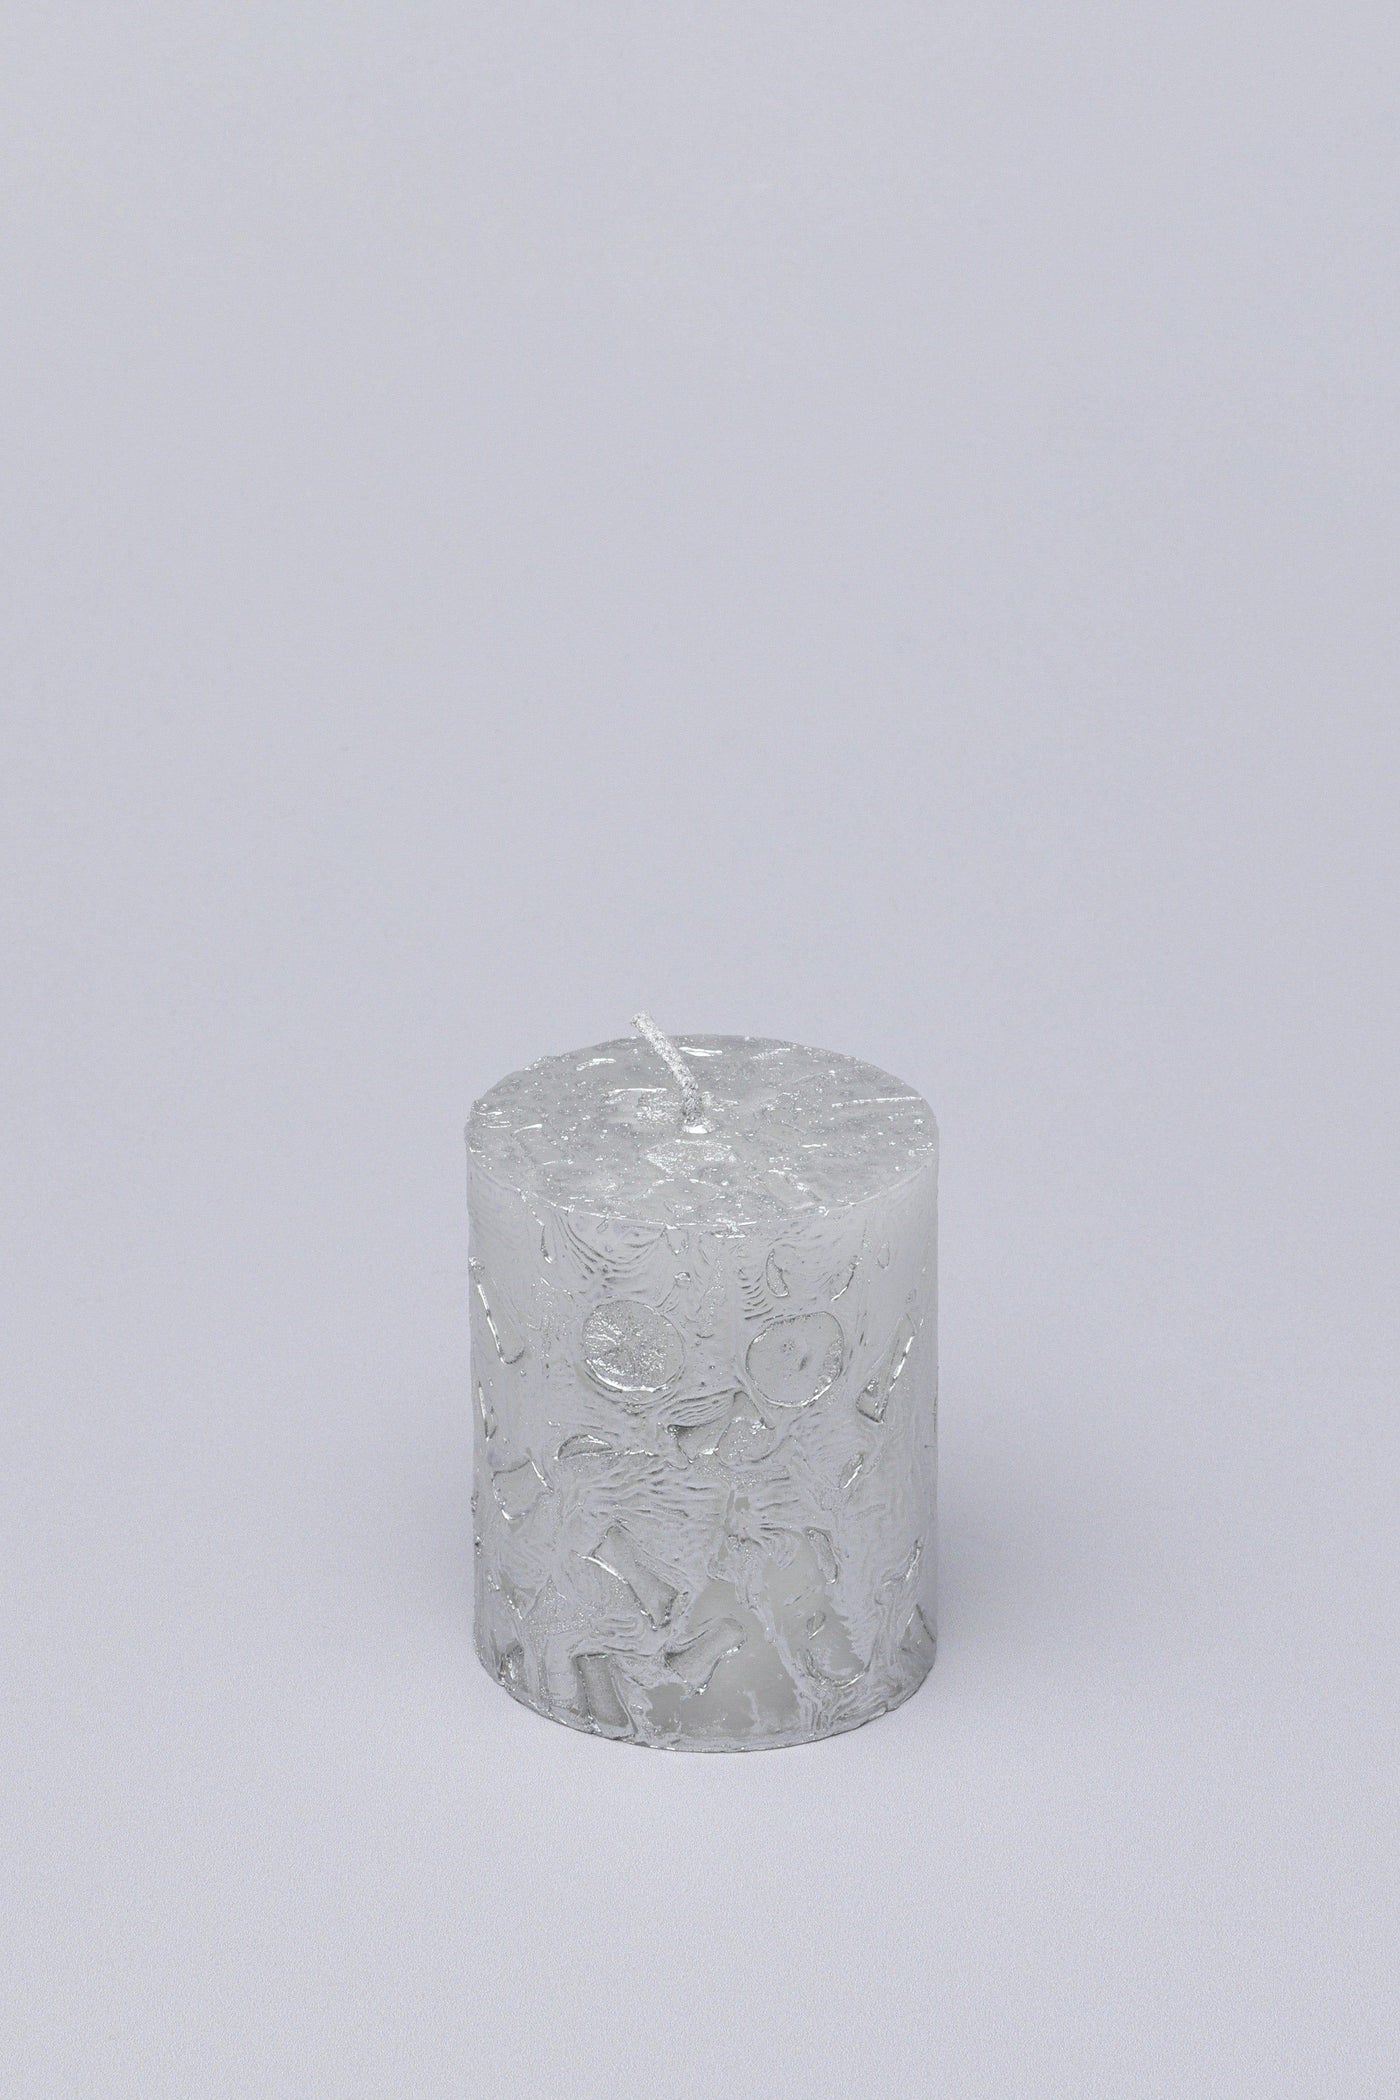 G Decor Candles Silver / Small Adeline Silver Metallic Textured Pillar Candle